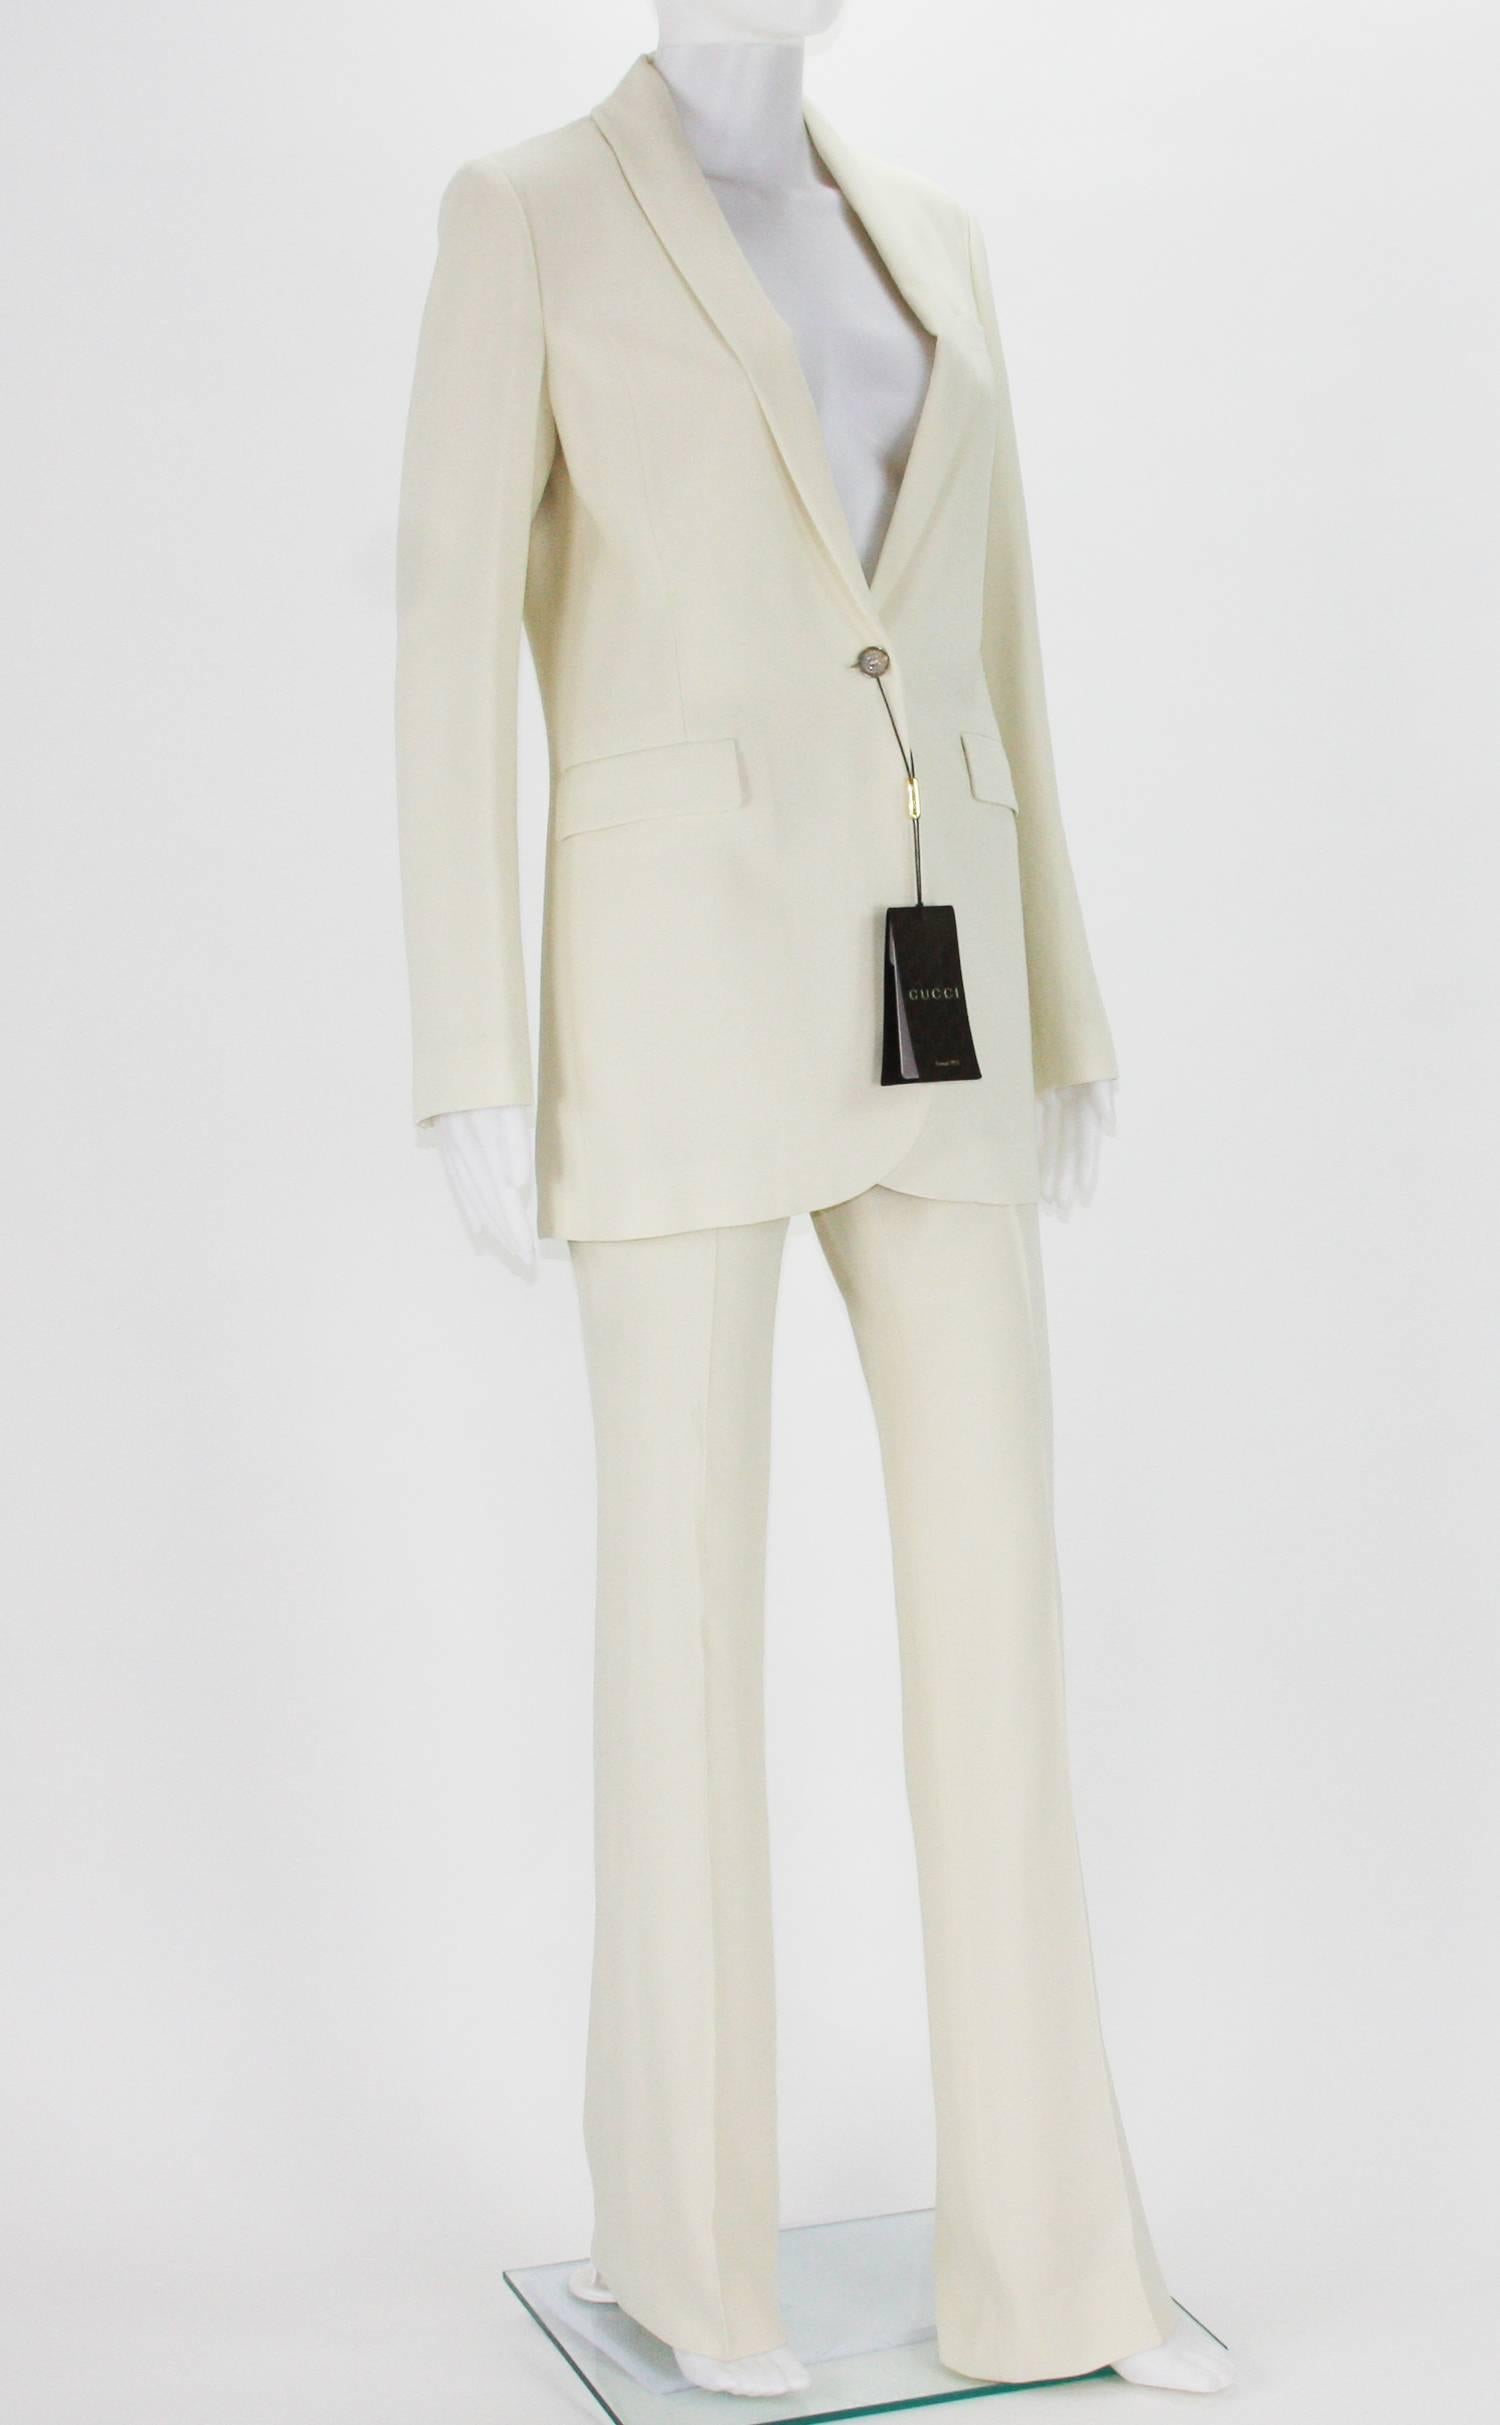 New Gucci Women's Matte Satin Pant Suit
Italian size 40 - US 4
Designer color - Alabaster
Content: 61% Rayon, 39% Acetate, Lining - 90% Silk, 10% Elastane.
Blazer - Single Button Closure, Straight Silhouette, Welt Chest Pocket, Two Front Flap